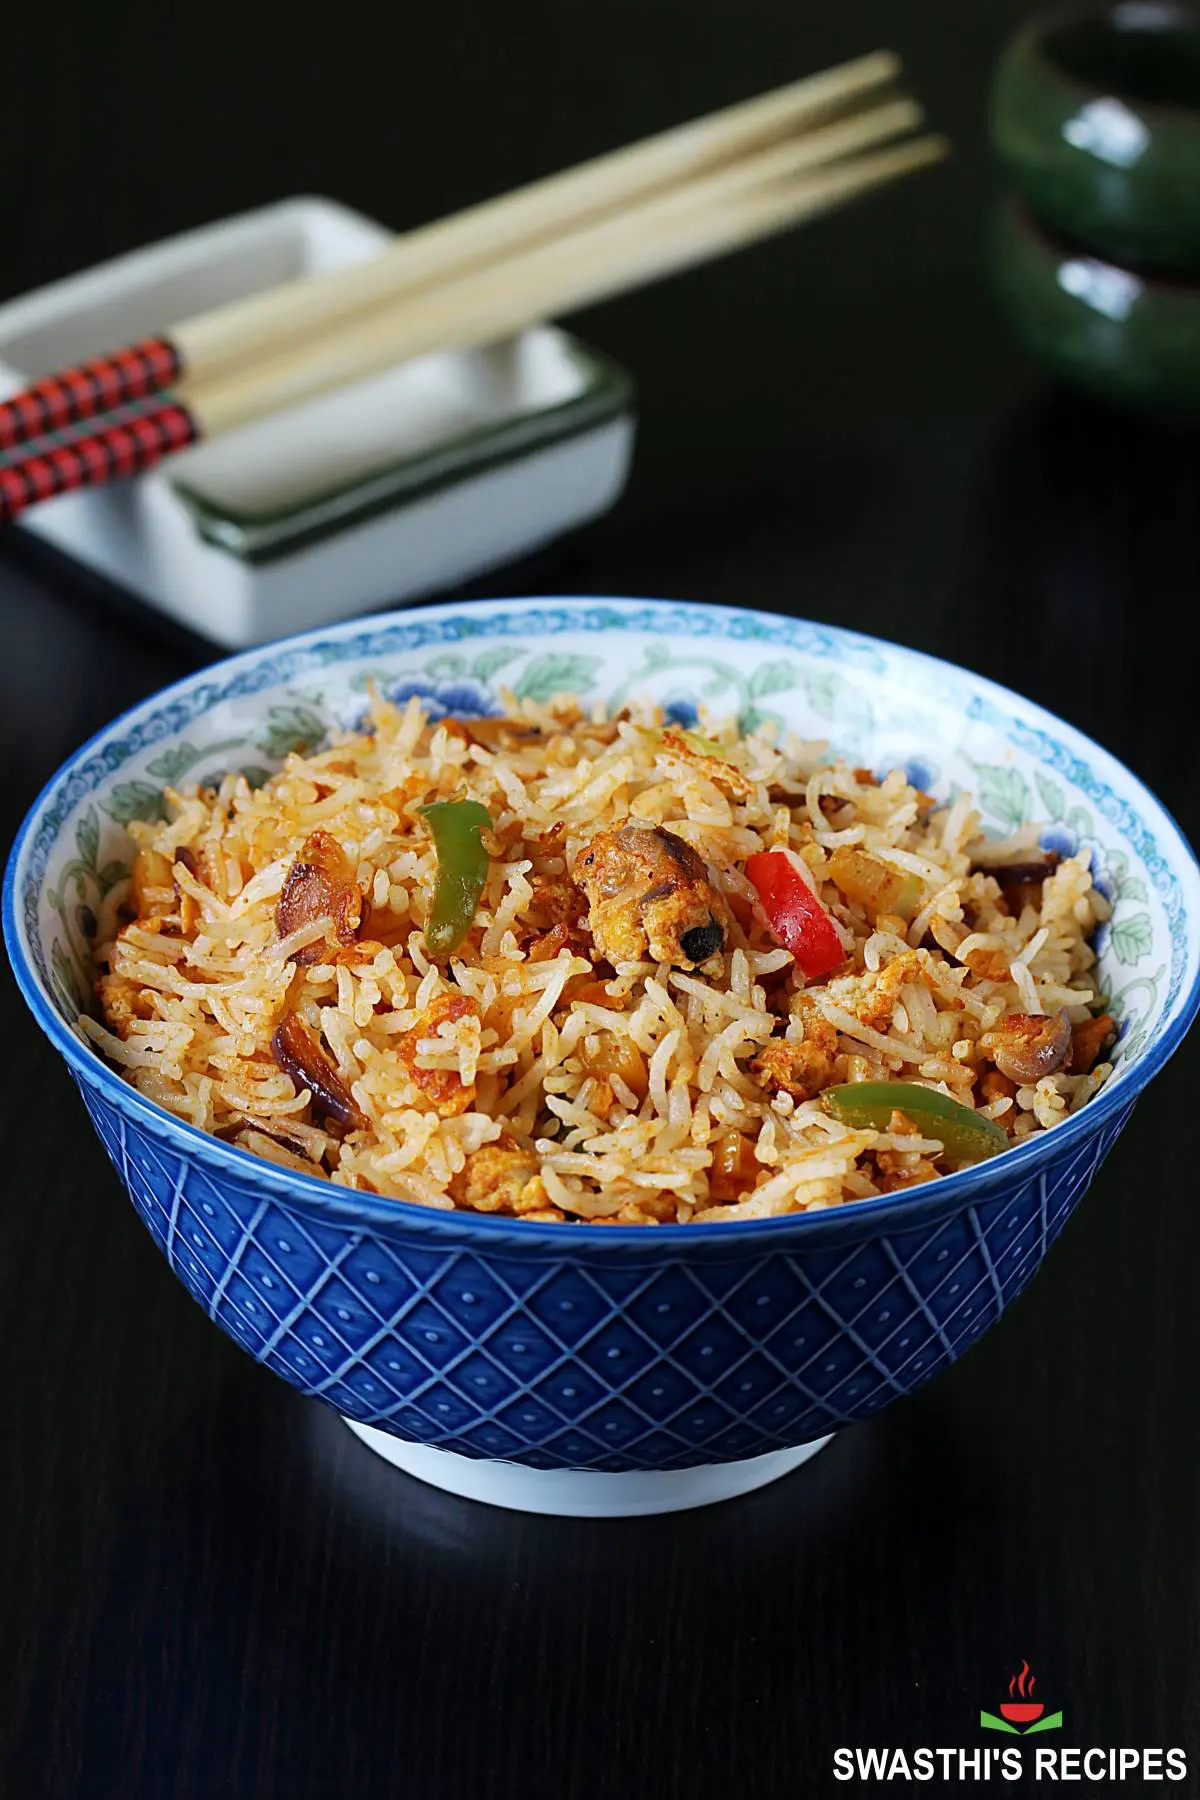 Egg fried rice (Chinese restaurant style) - Swasthi's Recipes